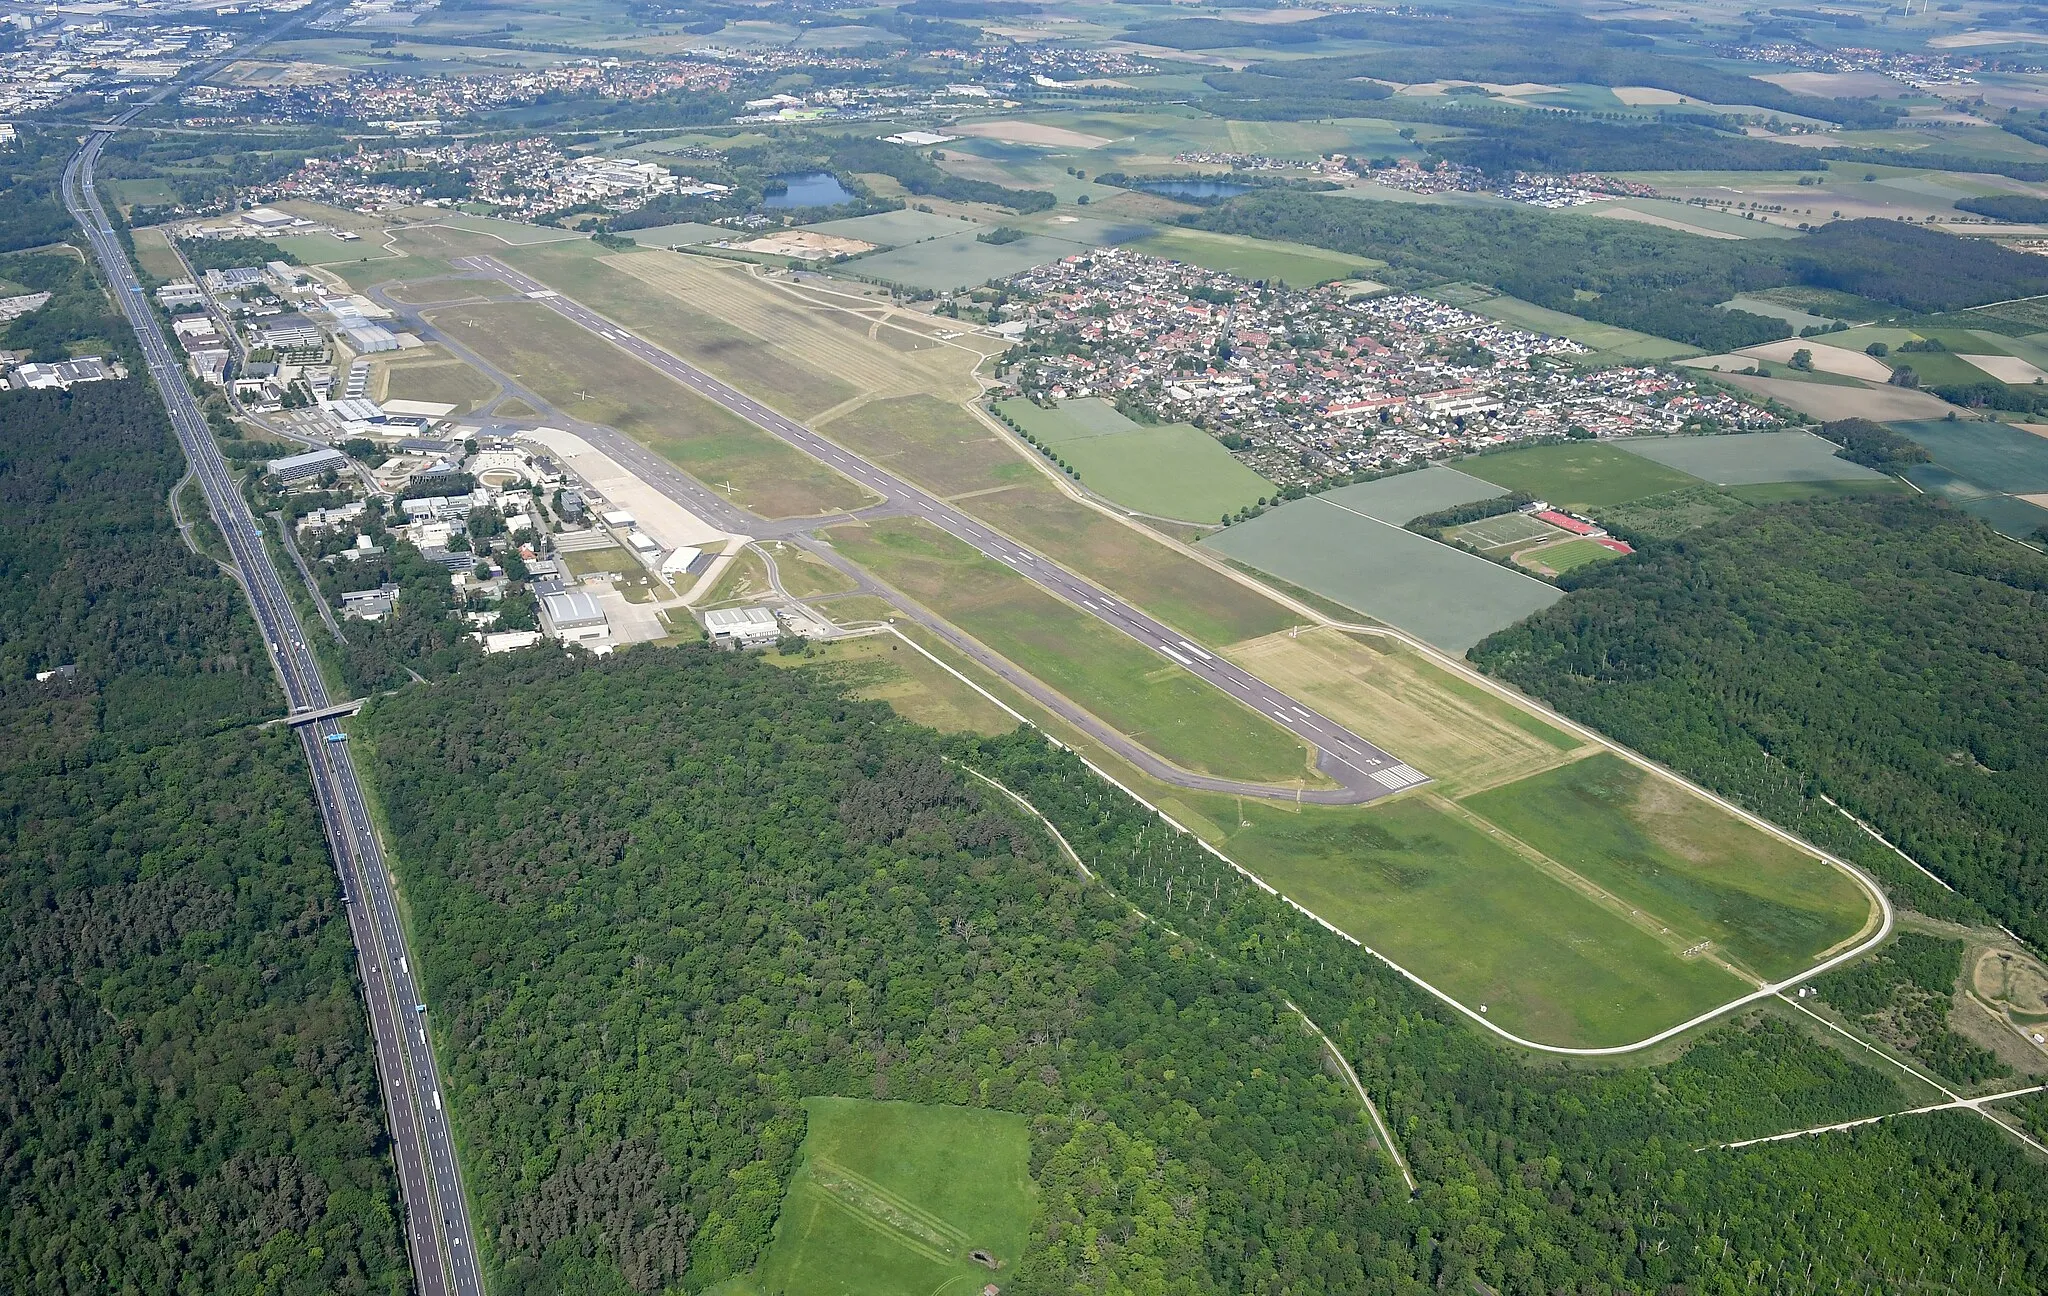 Photo showing: Aerial image of the Braunschweig-Wolfsburg airport